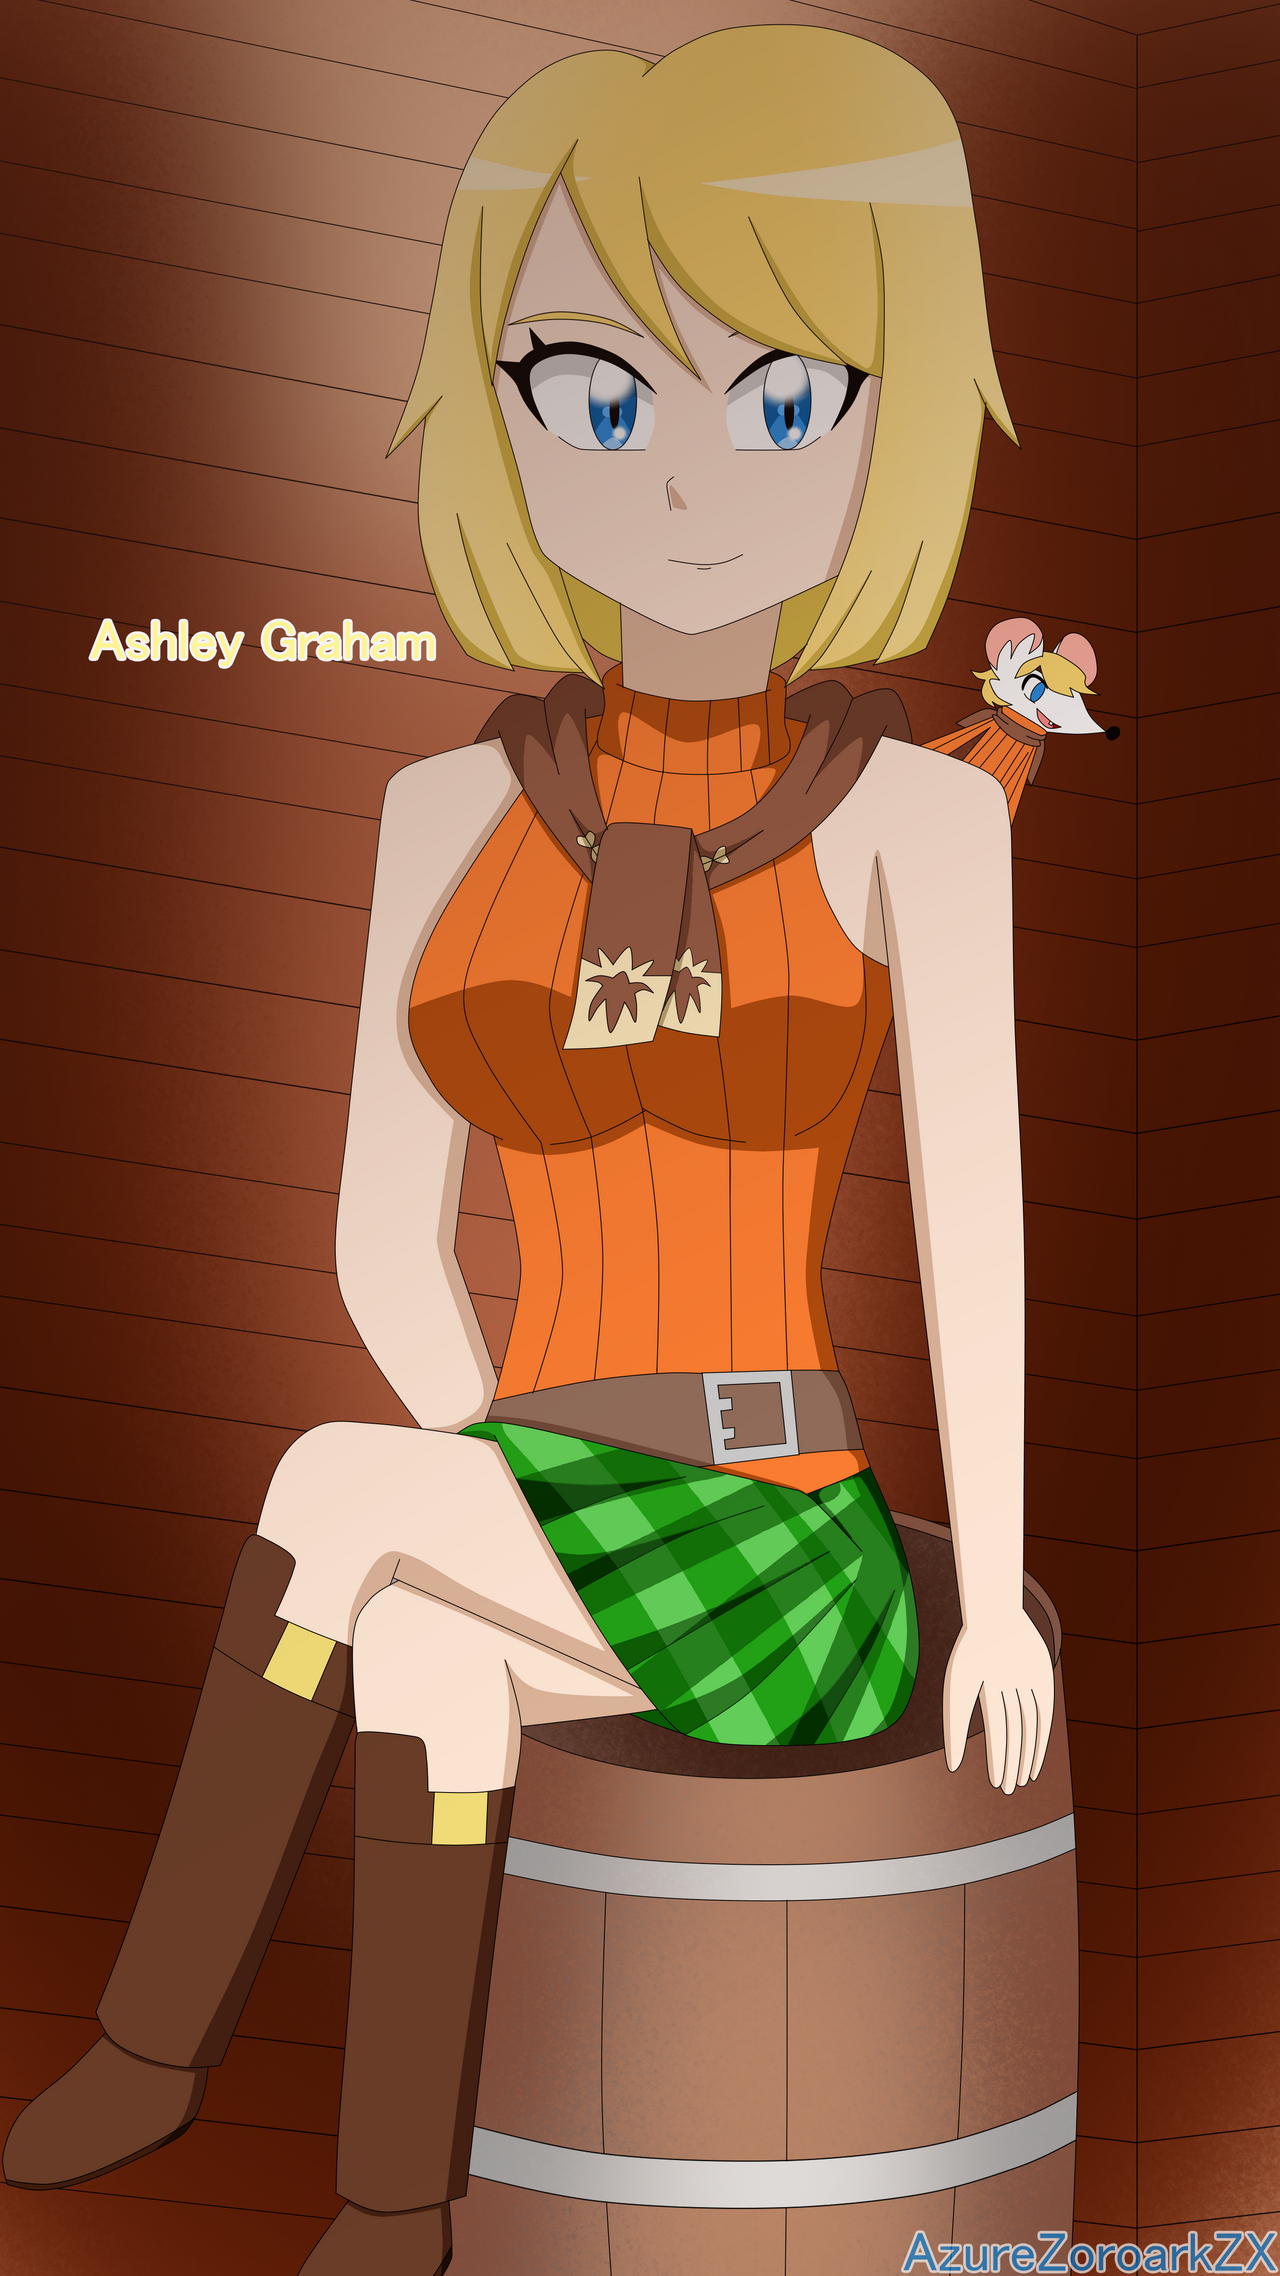 resident evil 4 Ashley Graham cosplay remake by LadyofRohan87 on DeviantArt